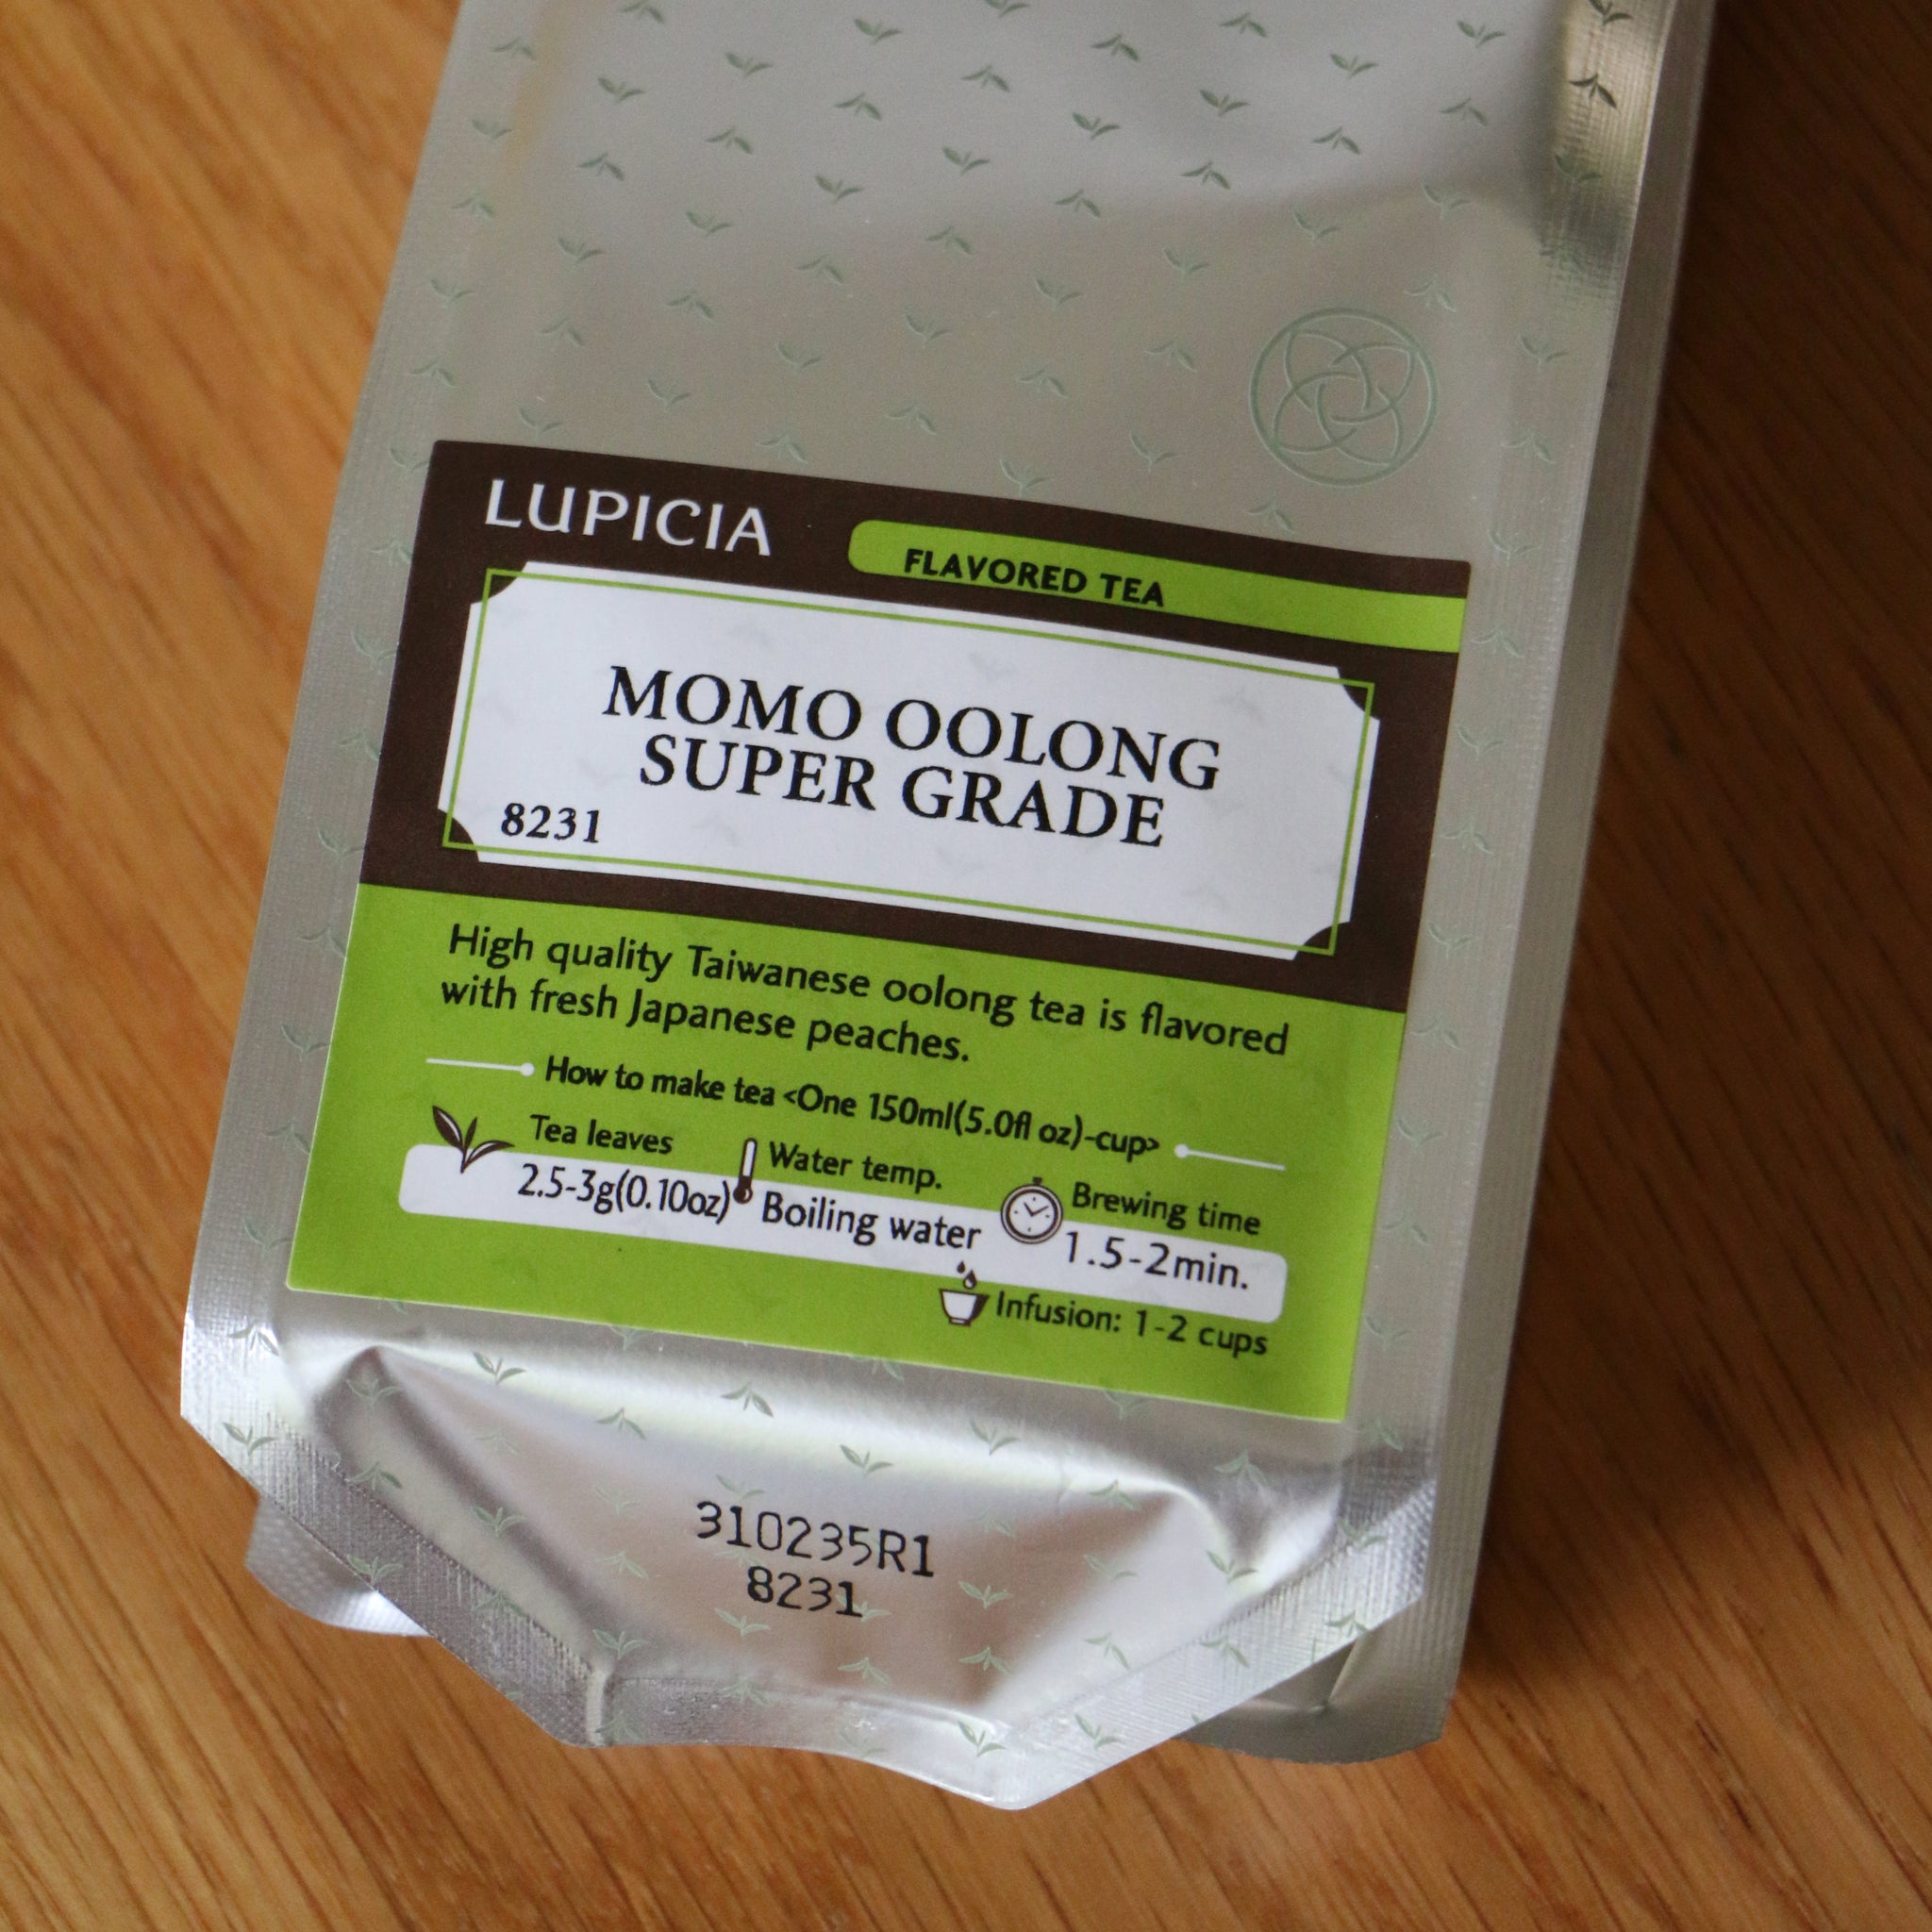 Lupicia Momo Oolong Super Grade